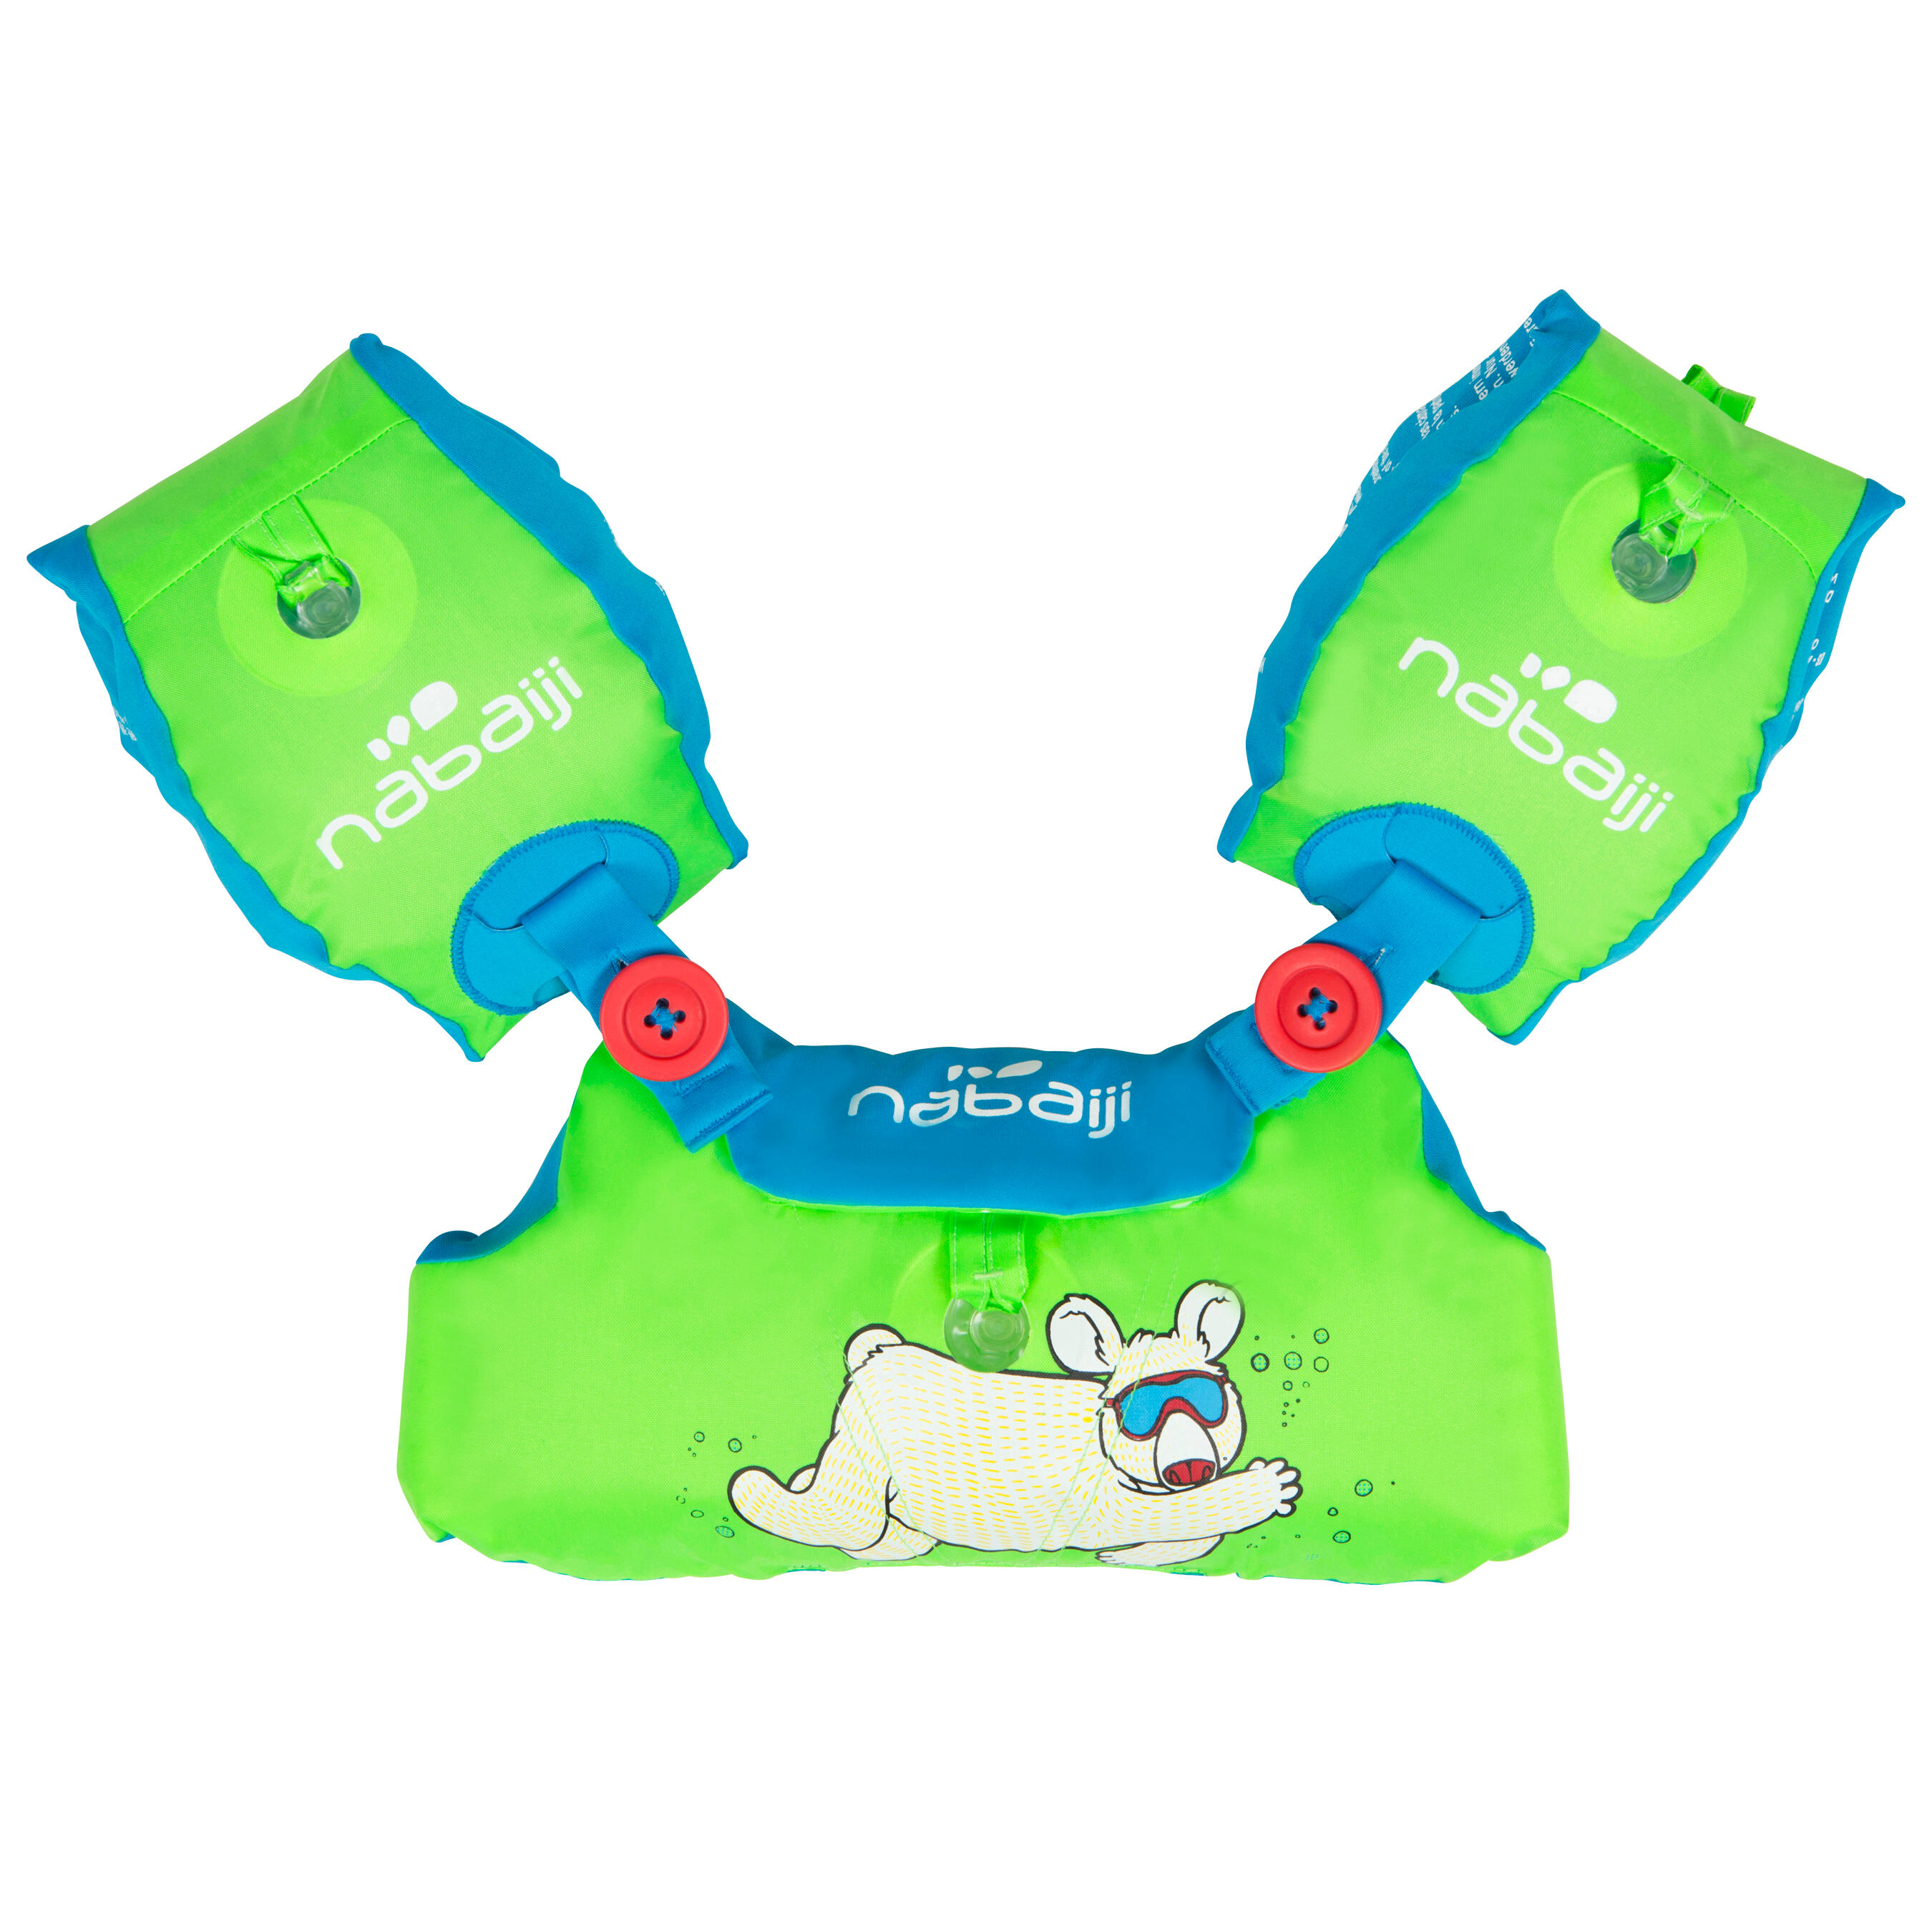 NABAIJI Tiswim progressive 15-30 kg armband-belt - green bear design